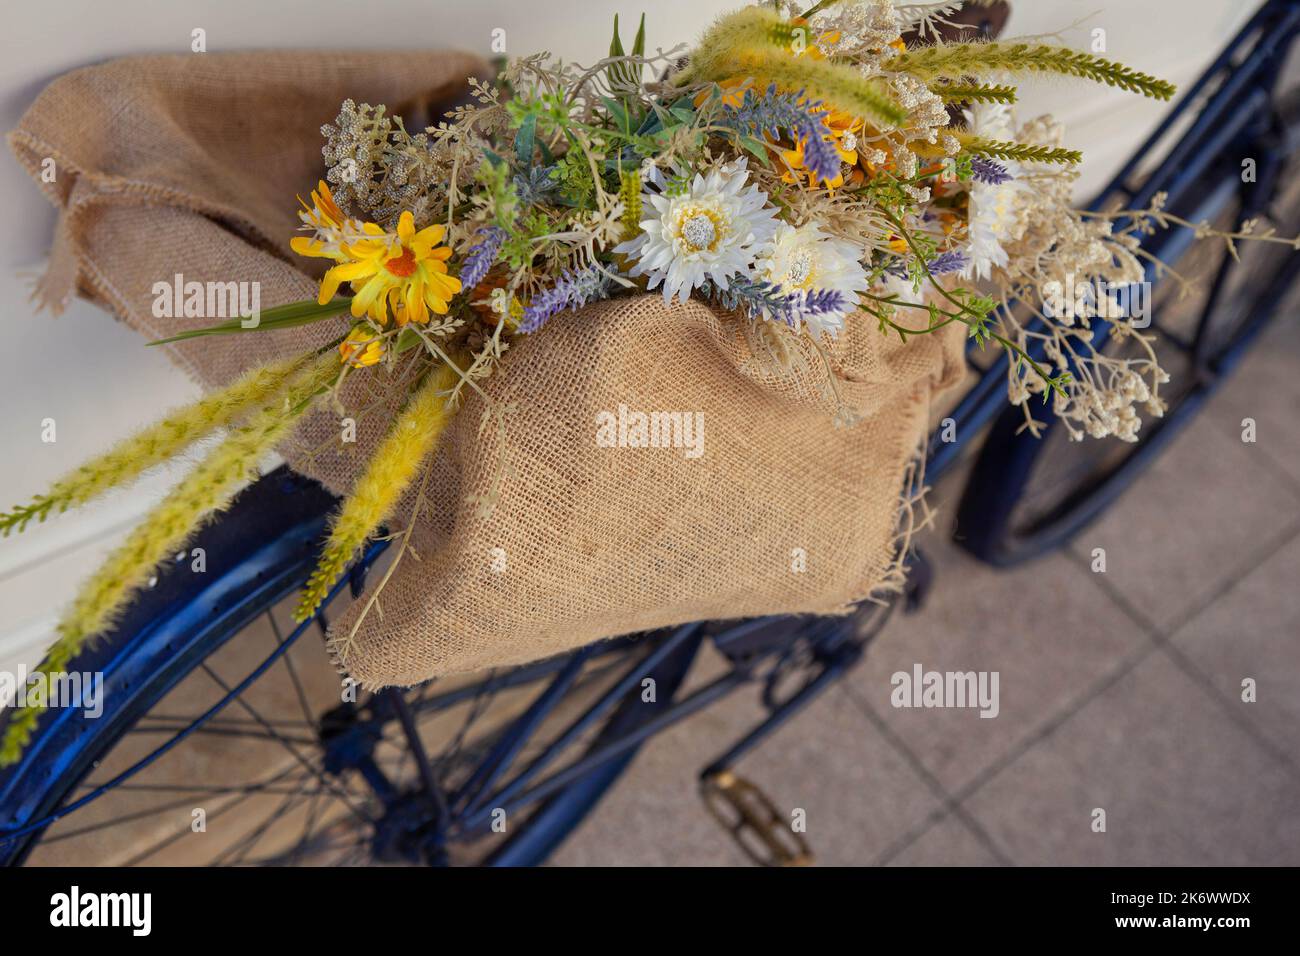 Field flower bouquet in a burlap bag Stock Photo